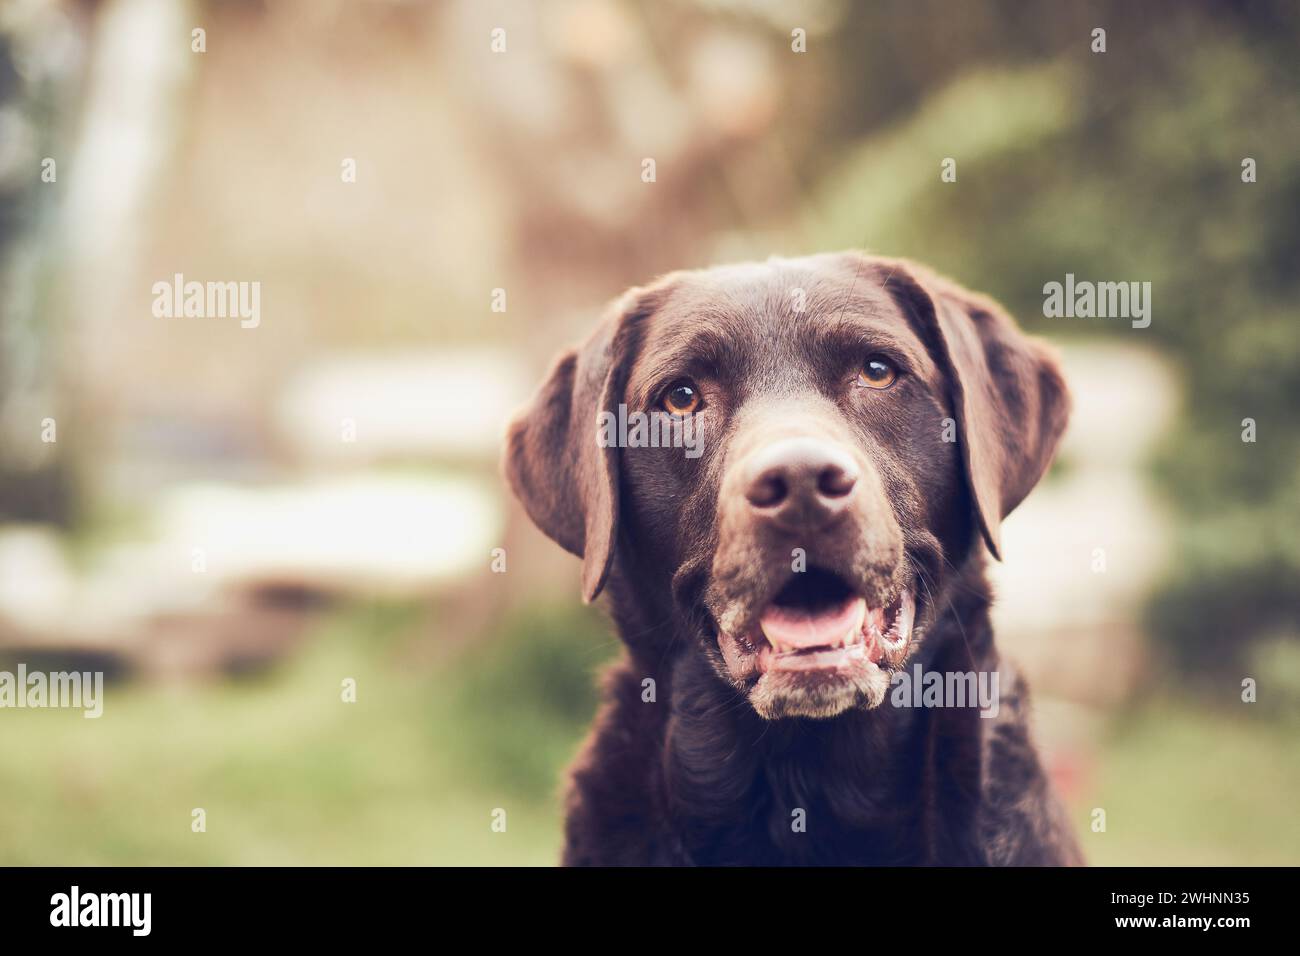 Brown Labrador smiling for the camera Stock Photo